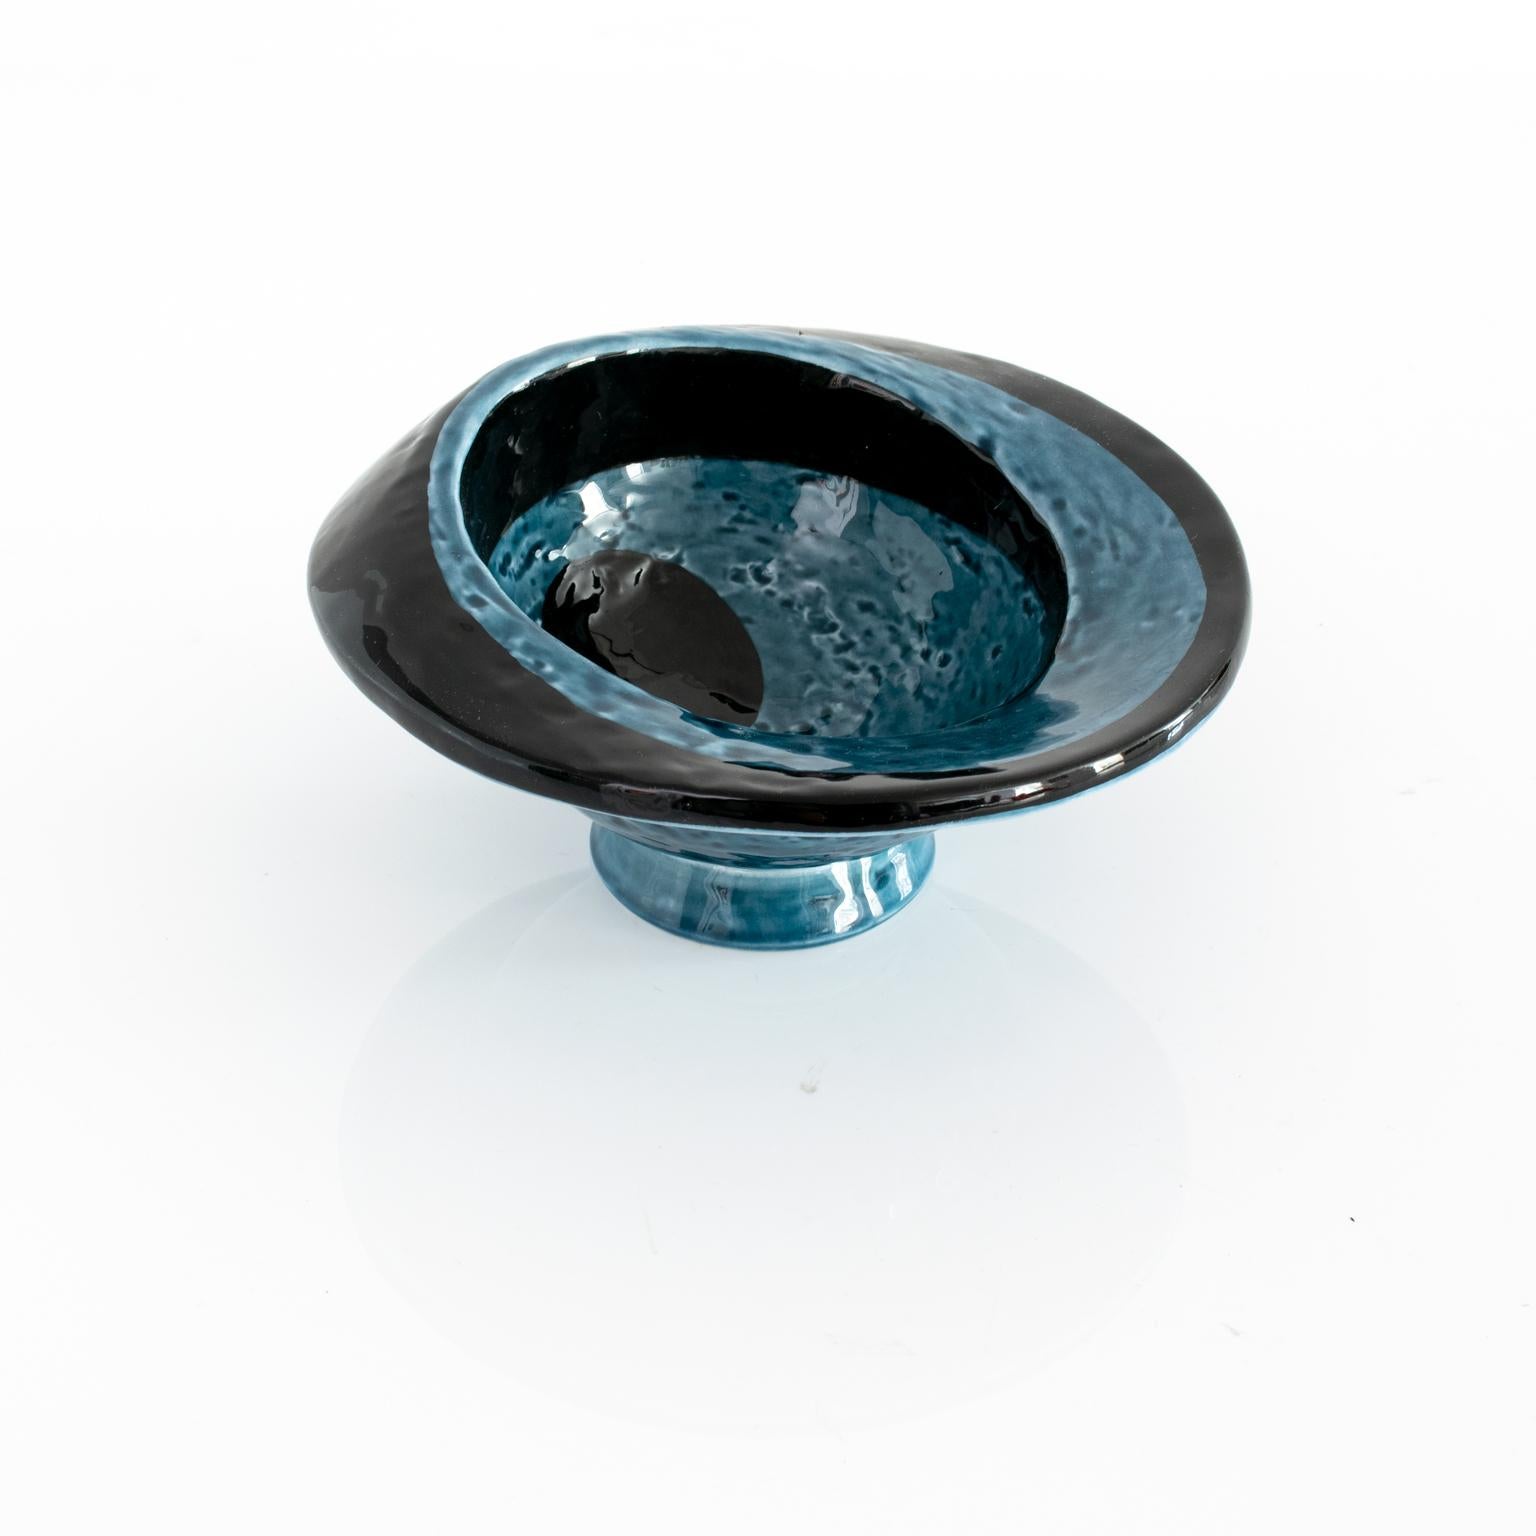 Danish artist and ceramicist Vilhelm Bjerke Petersen small blue and black glazed surrealist bowl for Rorstrand, circa 1960s. 

Measures: Diameter 6.5